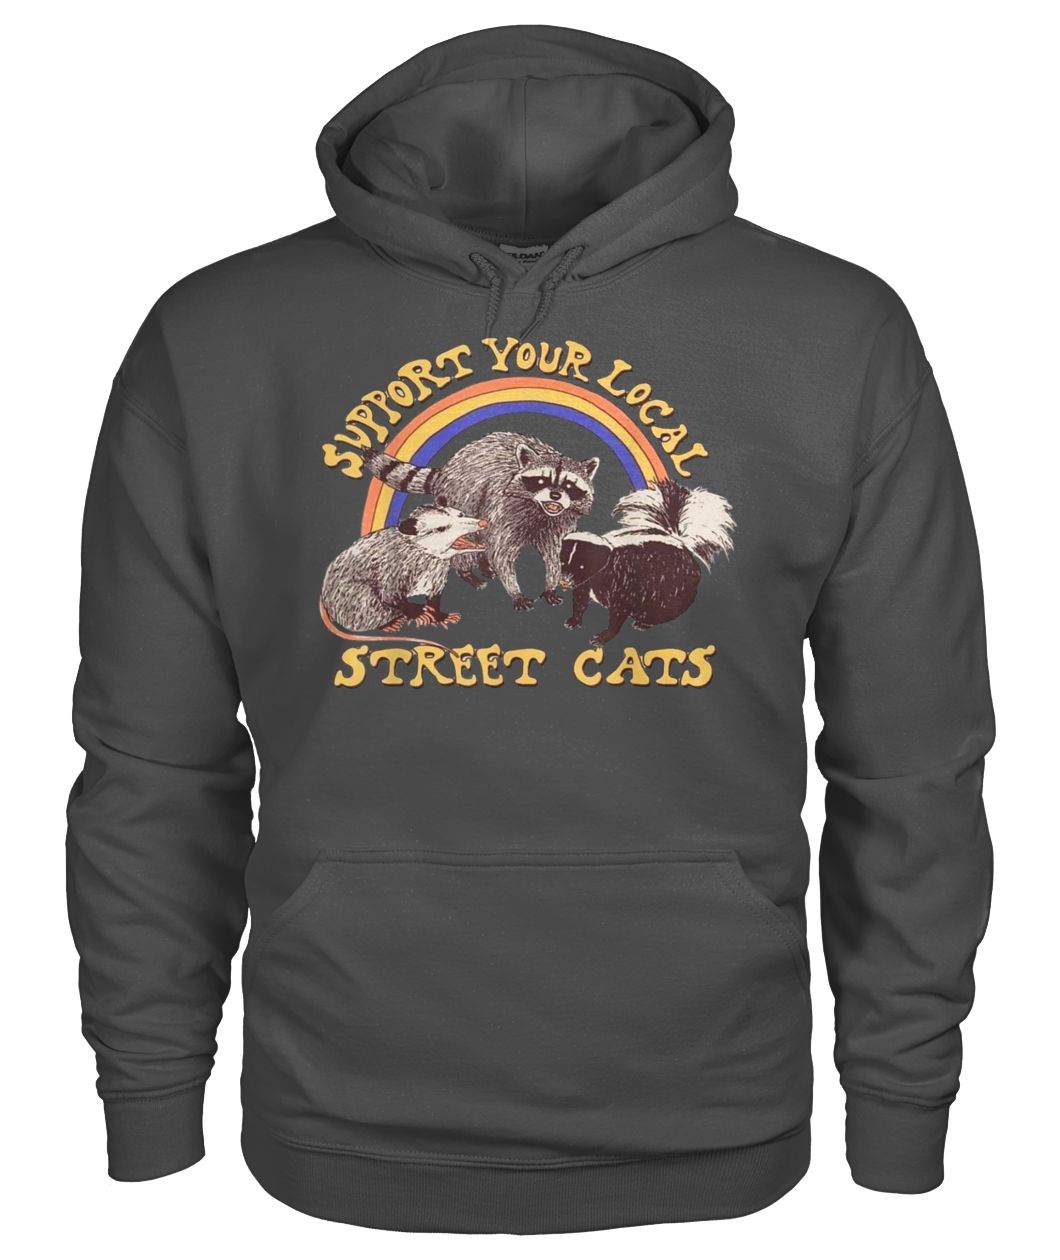 Support your local street cats gildan hoodie